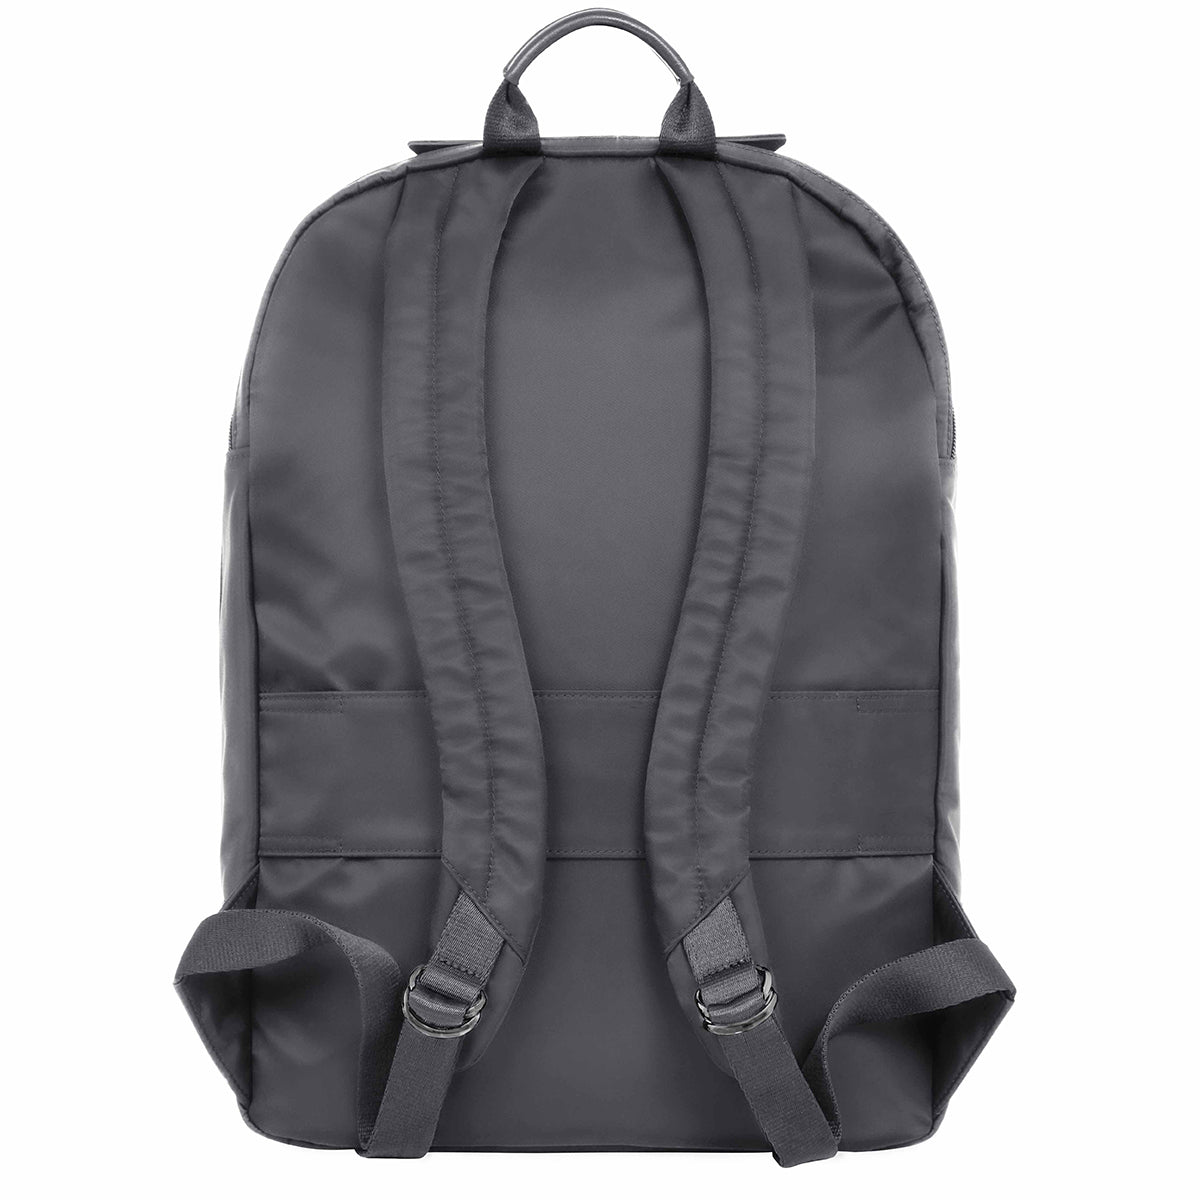 Beauchamp Laptop Backpack – 14